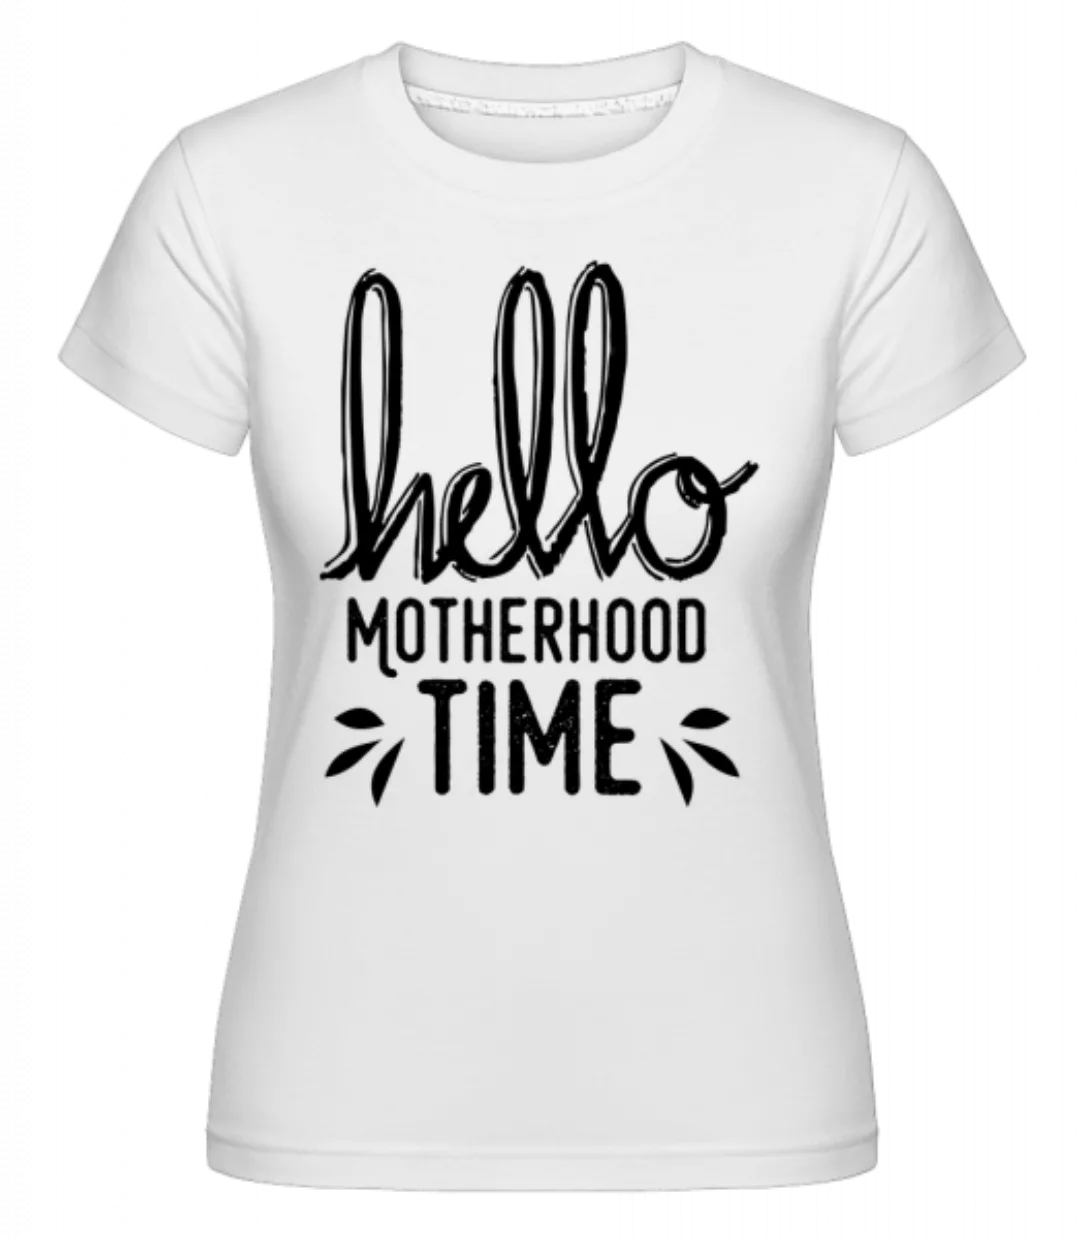 Hello Motherhood Time · Shirtinator Frauen T-Shirt günstig online kaufen